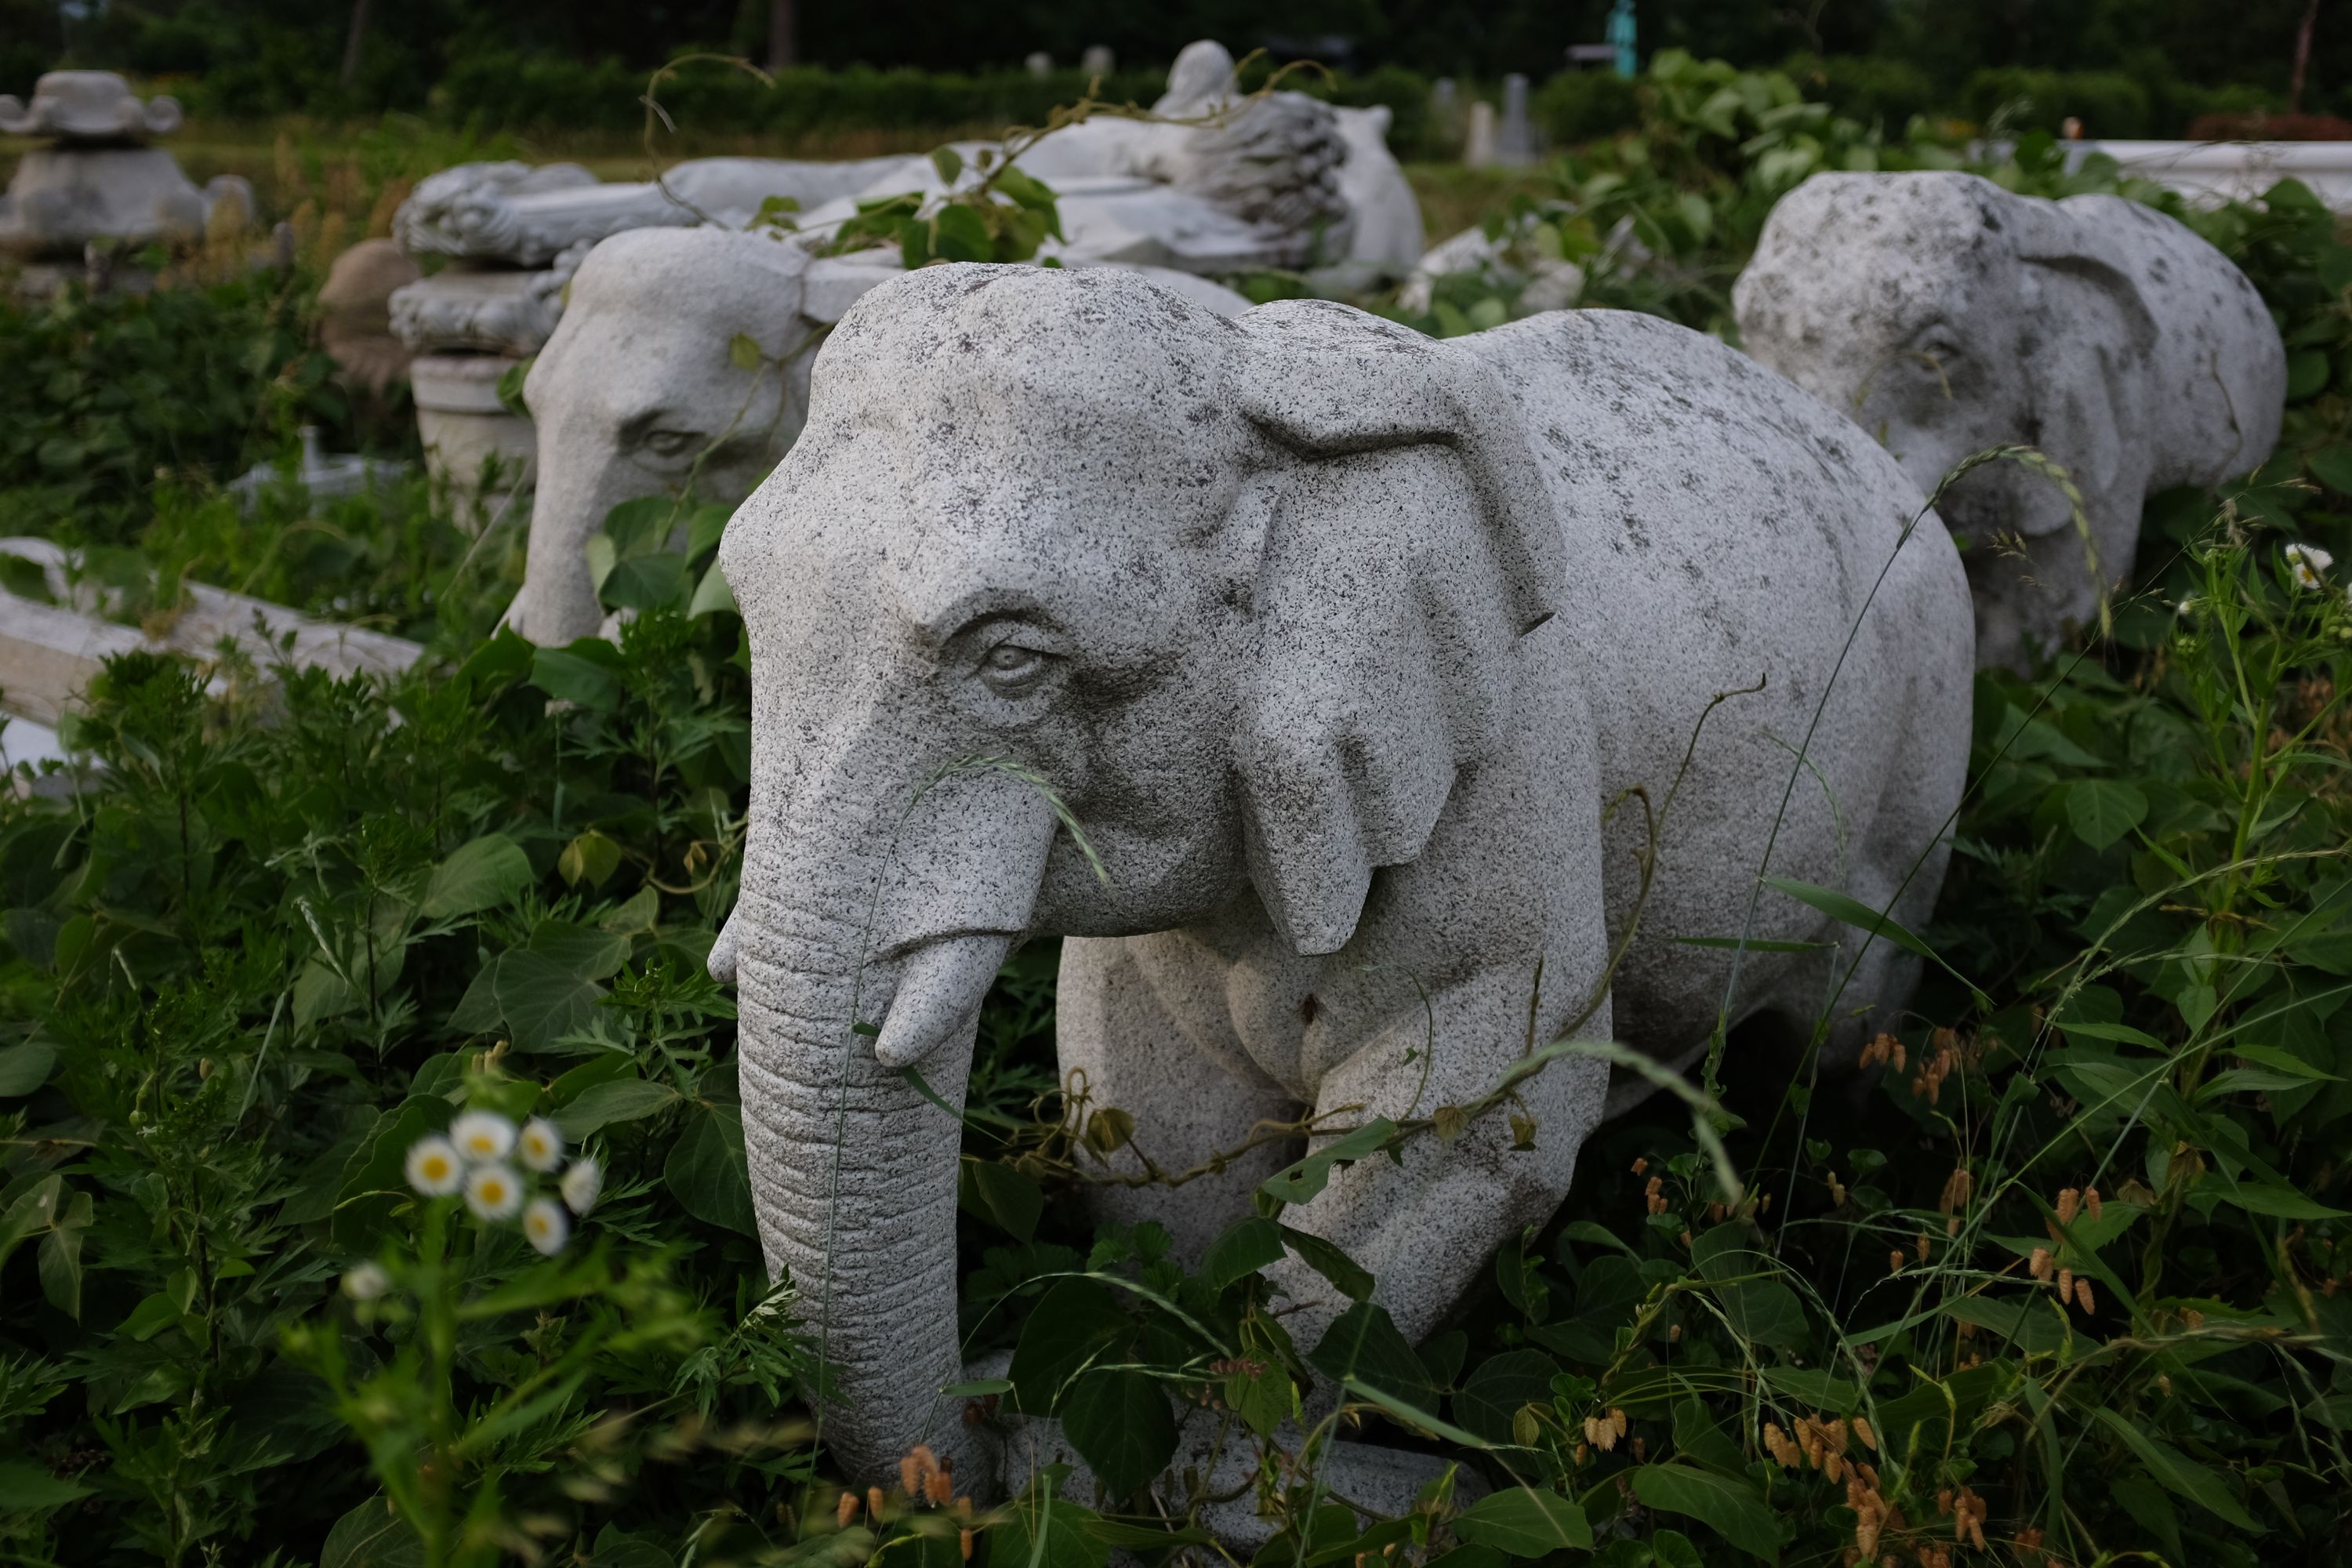 Stone statues of elephants walk in tall grass.